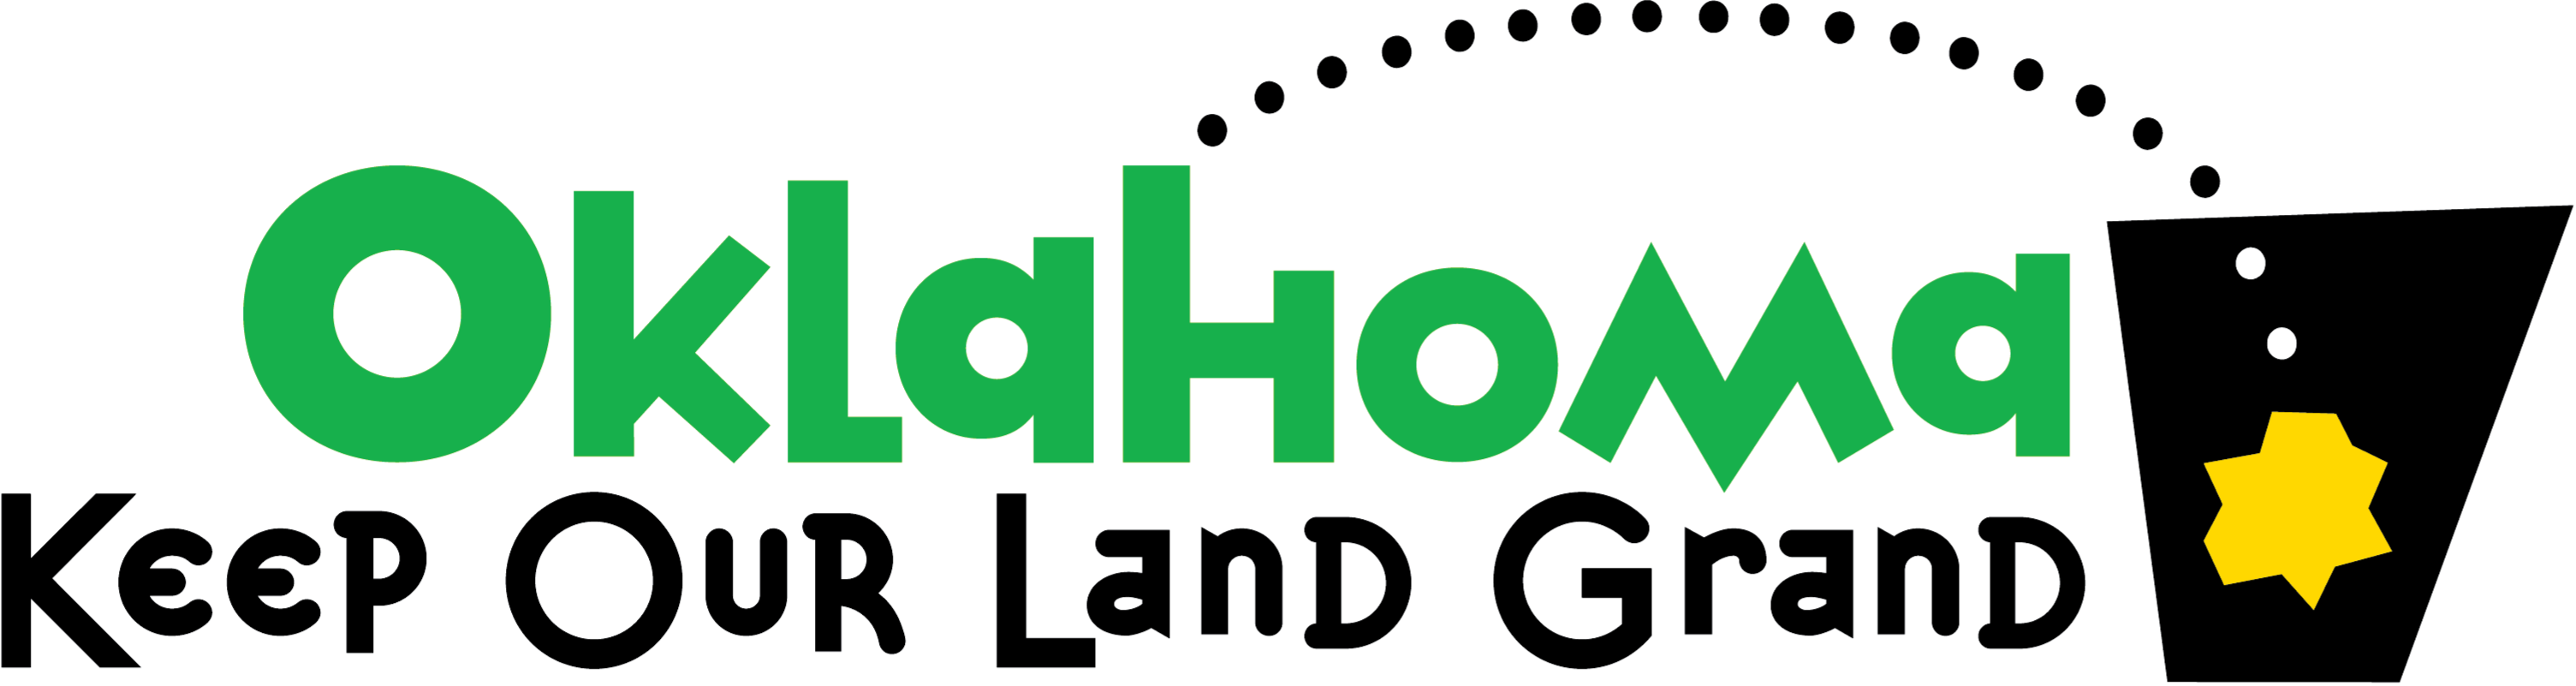 logo for oklahoma keep our land grand